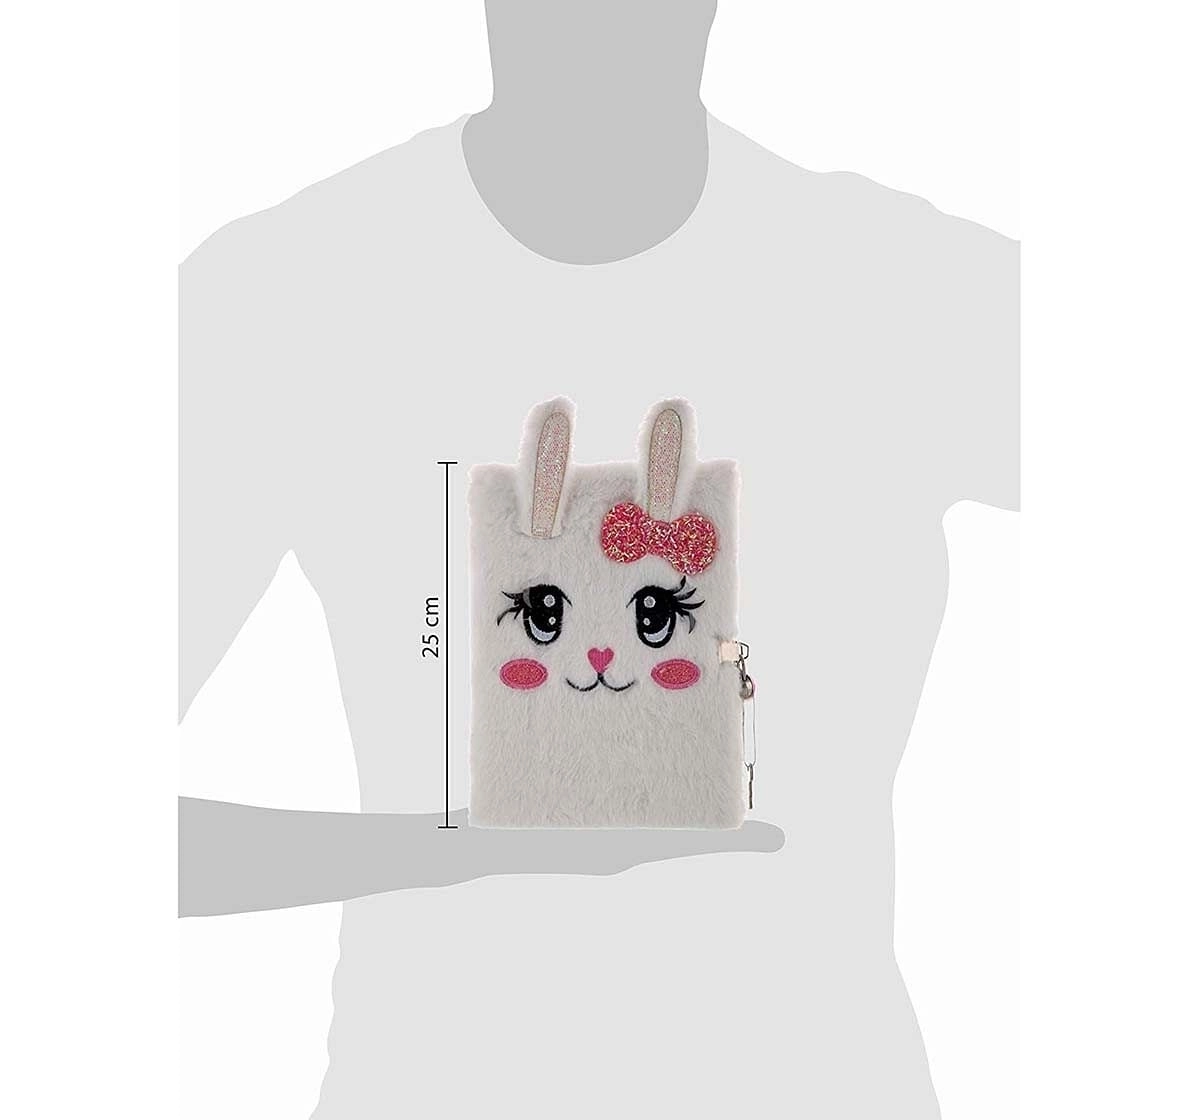 Mirada Miss Bunny Plush Study & Desk Accessories for Kids Age 3Y+ (White)